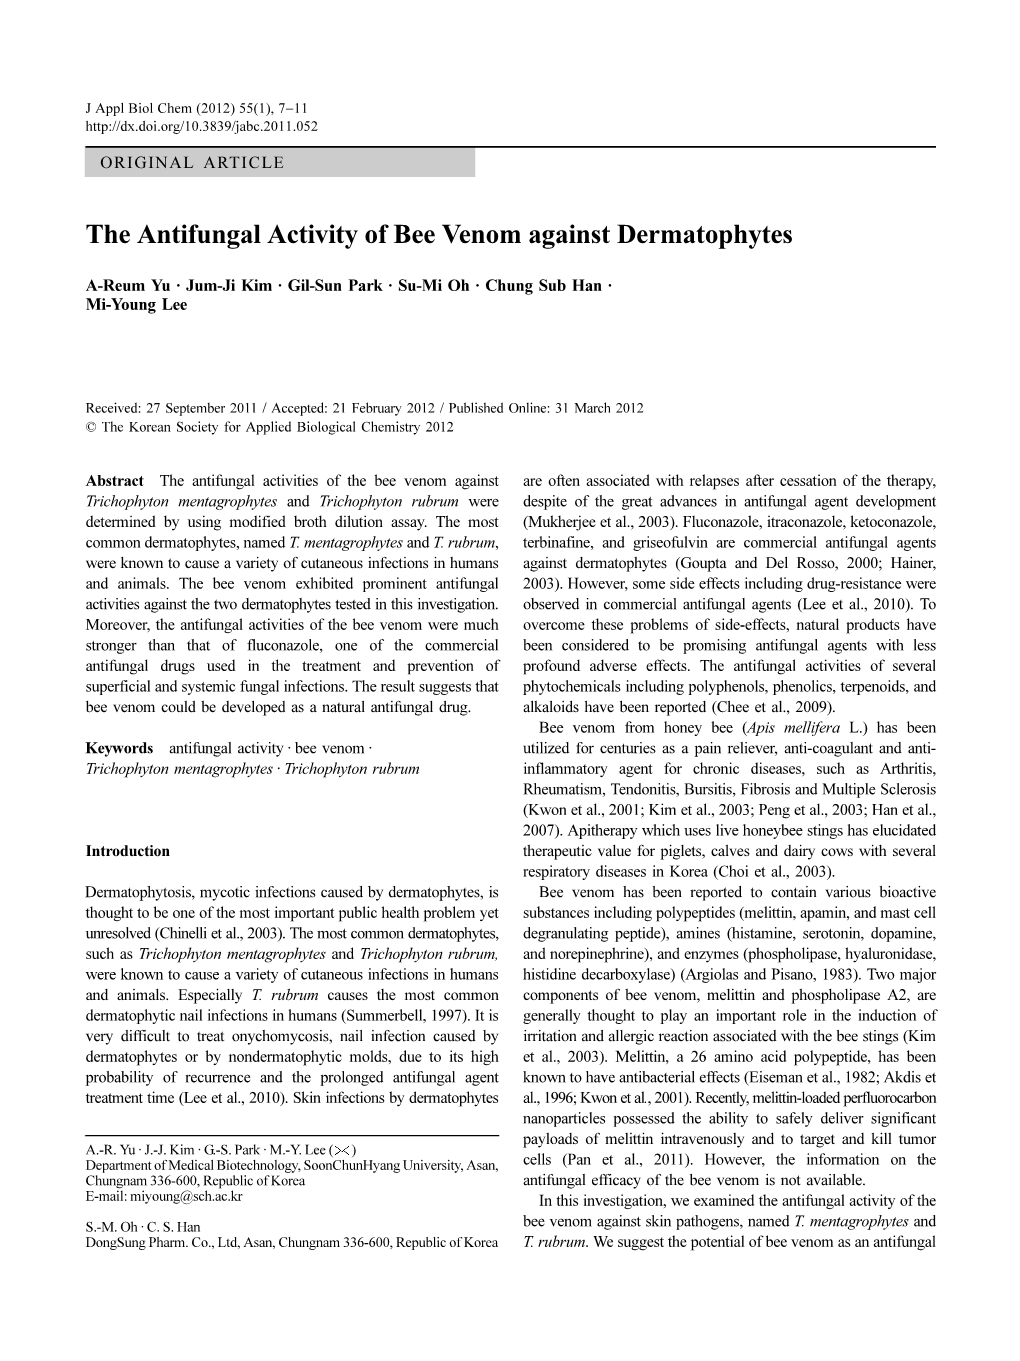 The Antifungal Activity of Bee Venom Against Dermatophytes